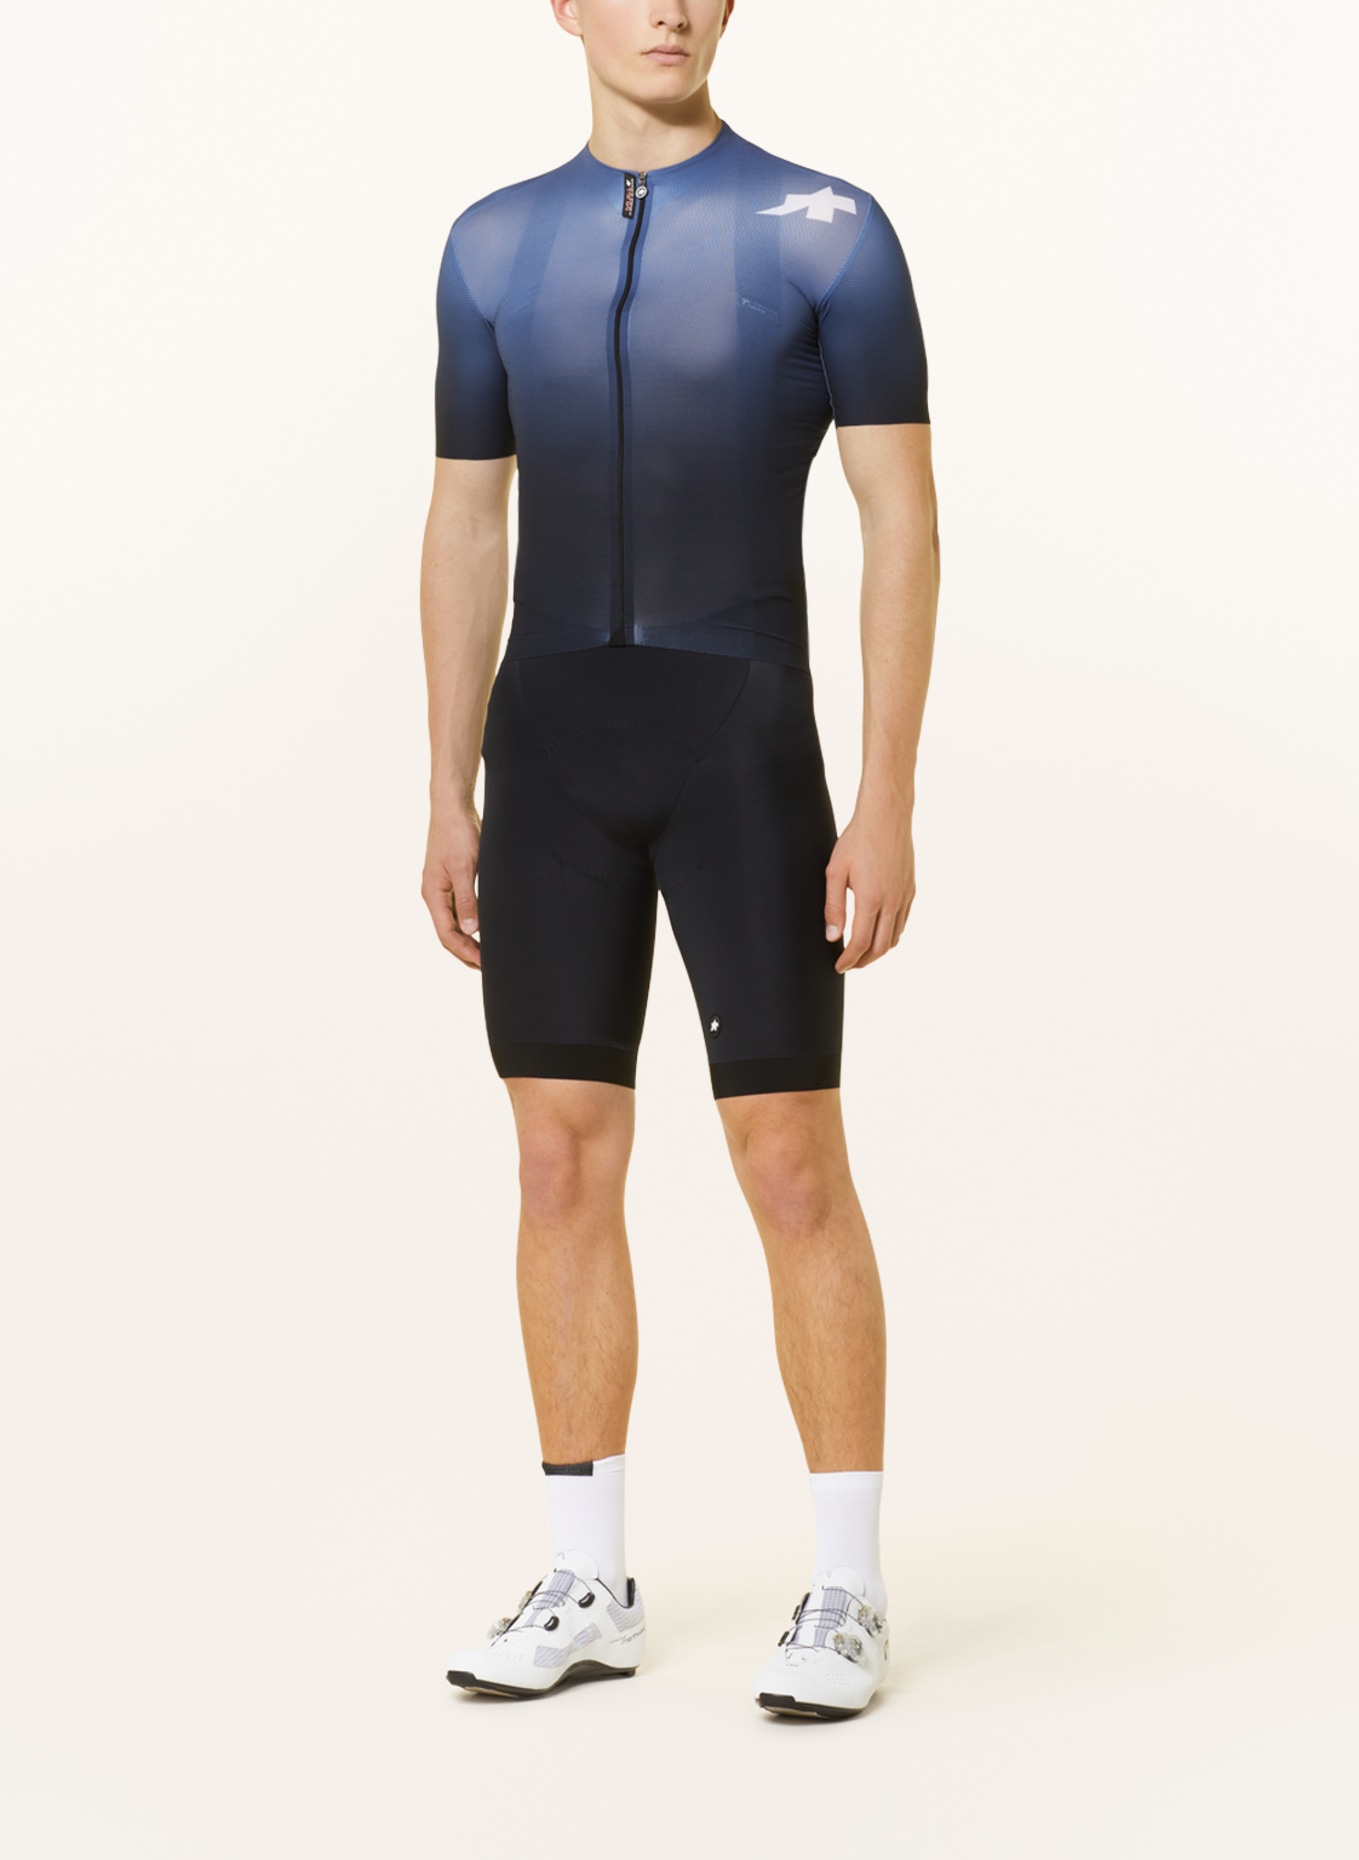 ASSOS Cycling jersey EQUIPE RS JERSEY S9 TARGA in dark blue